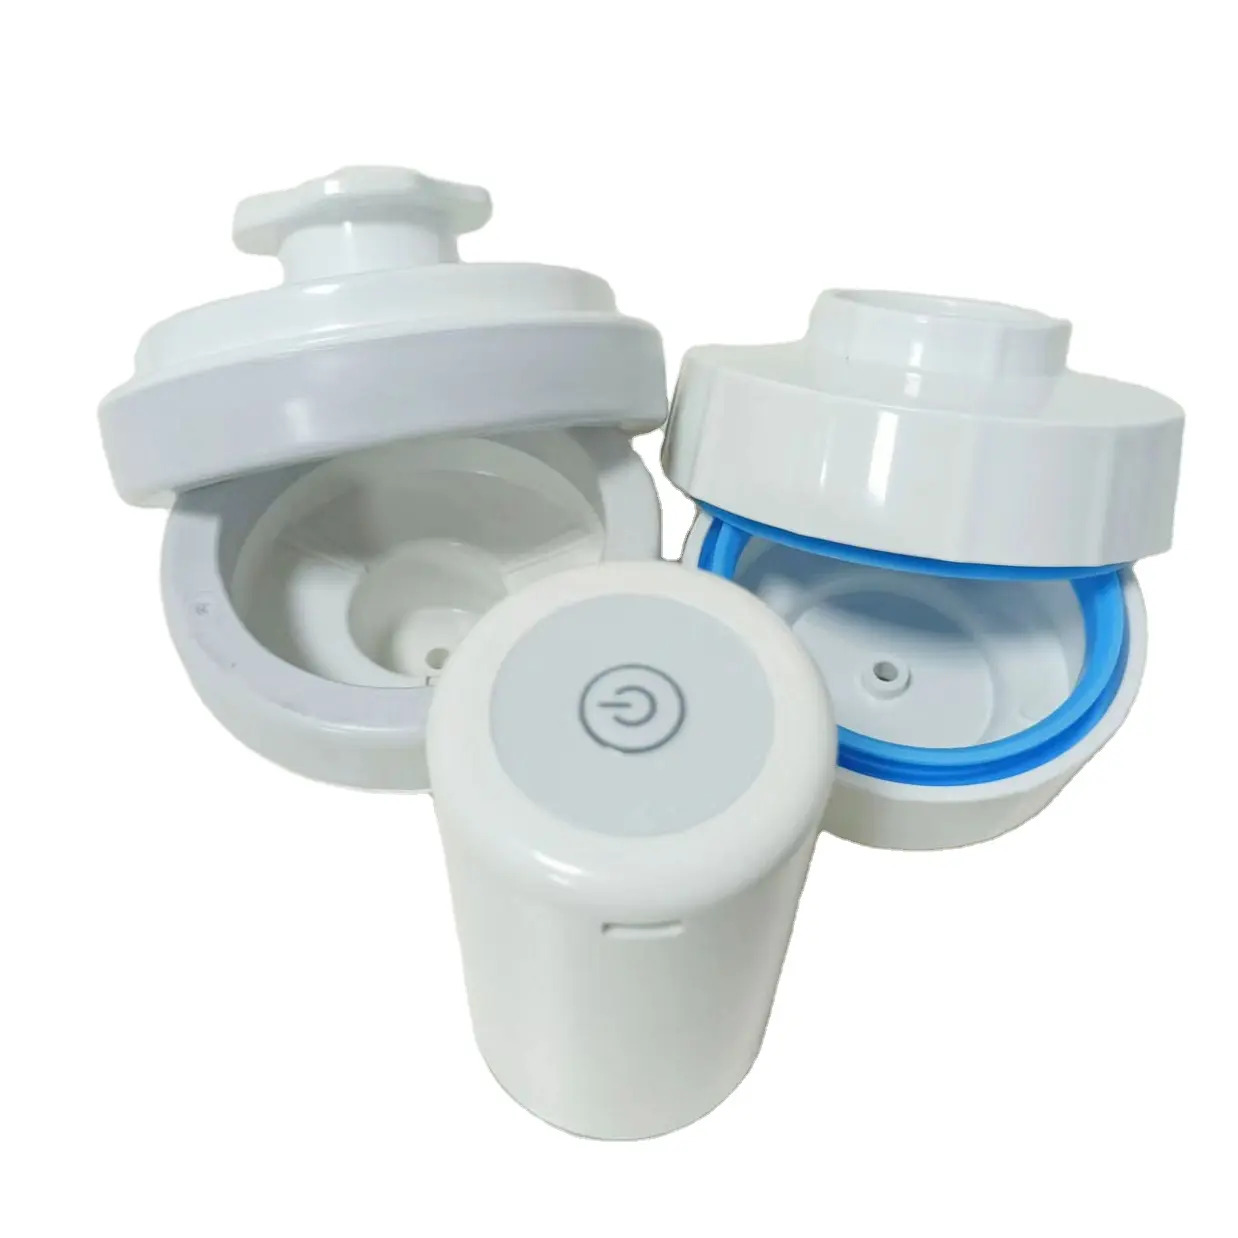 Amazon new product Jar Sealer for Foodsaver Vacuum Sealer Vacuum Sealer Kit for Wide-Mouth Mason Jar